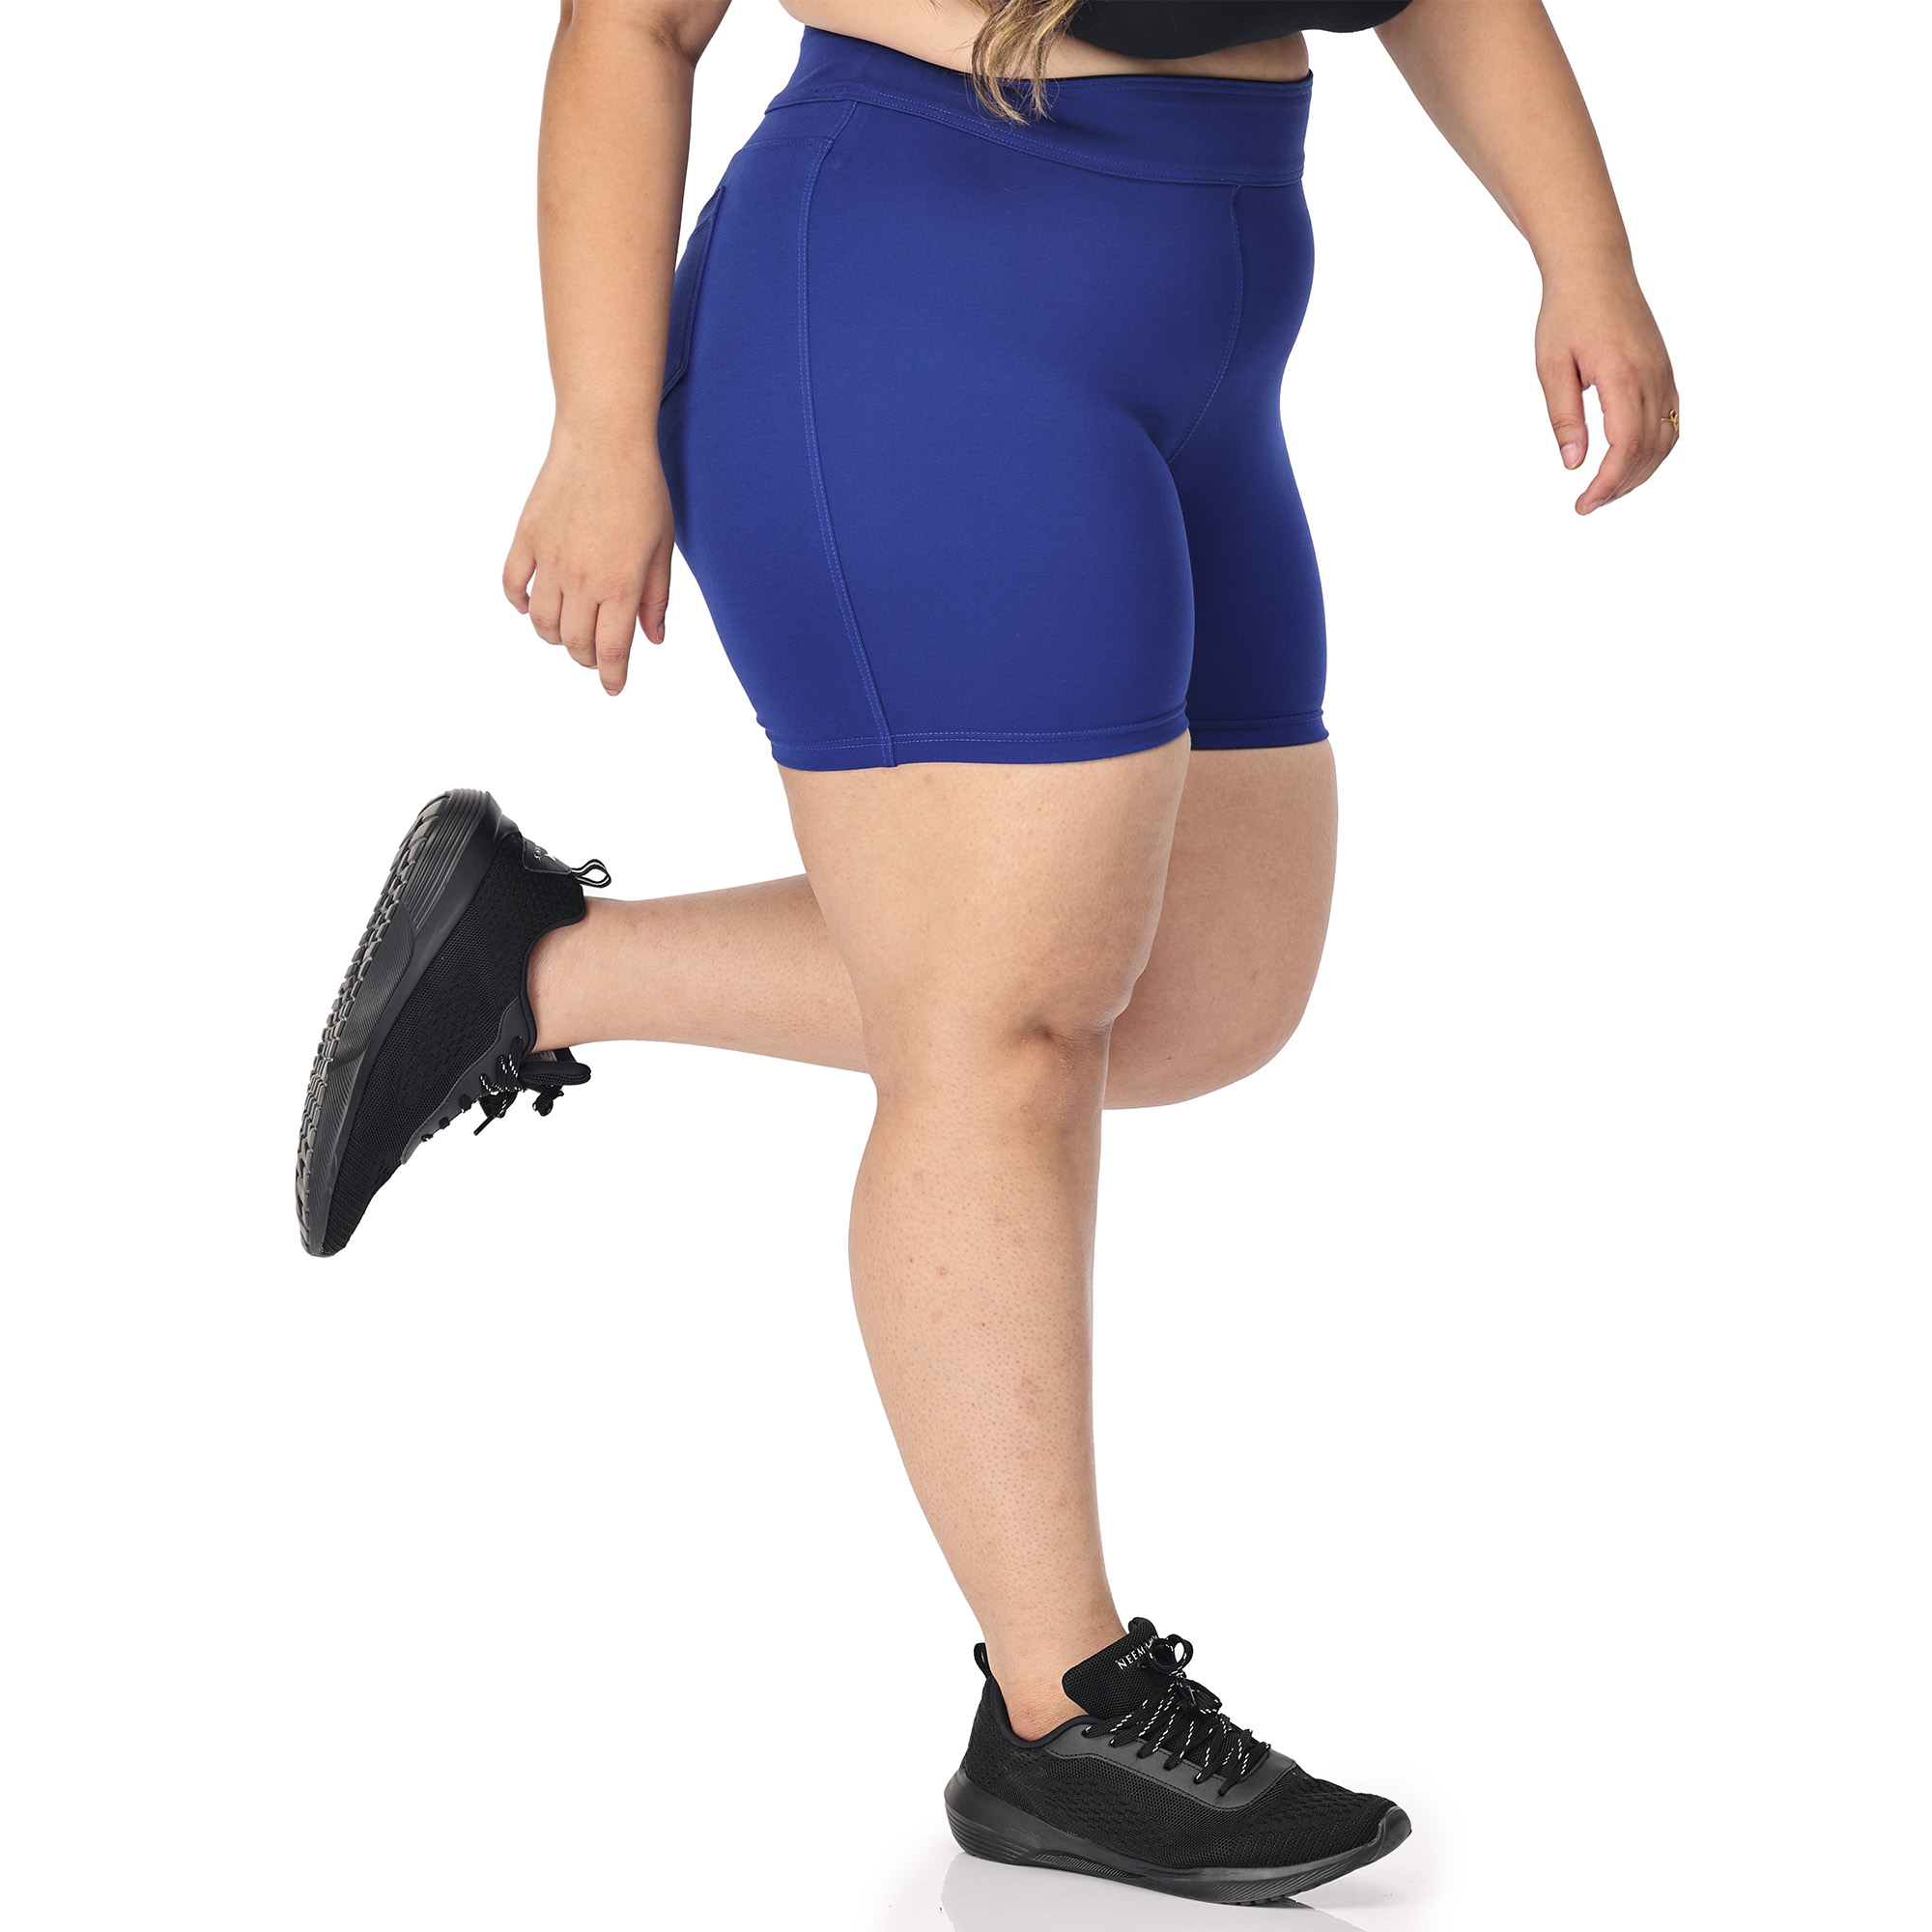 Royal blue shorts women -Plus size active shapewear-2bk pockets